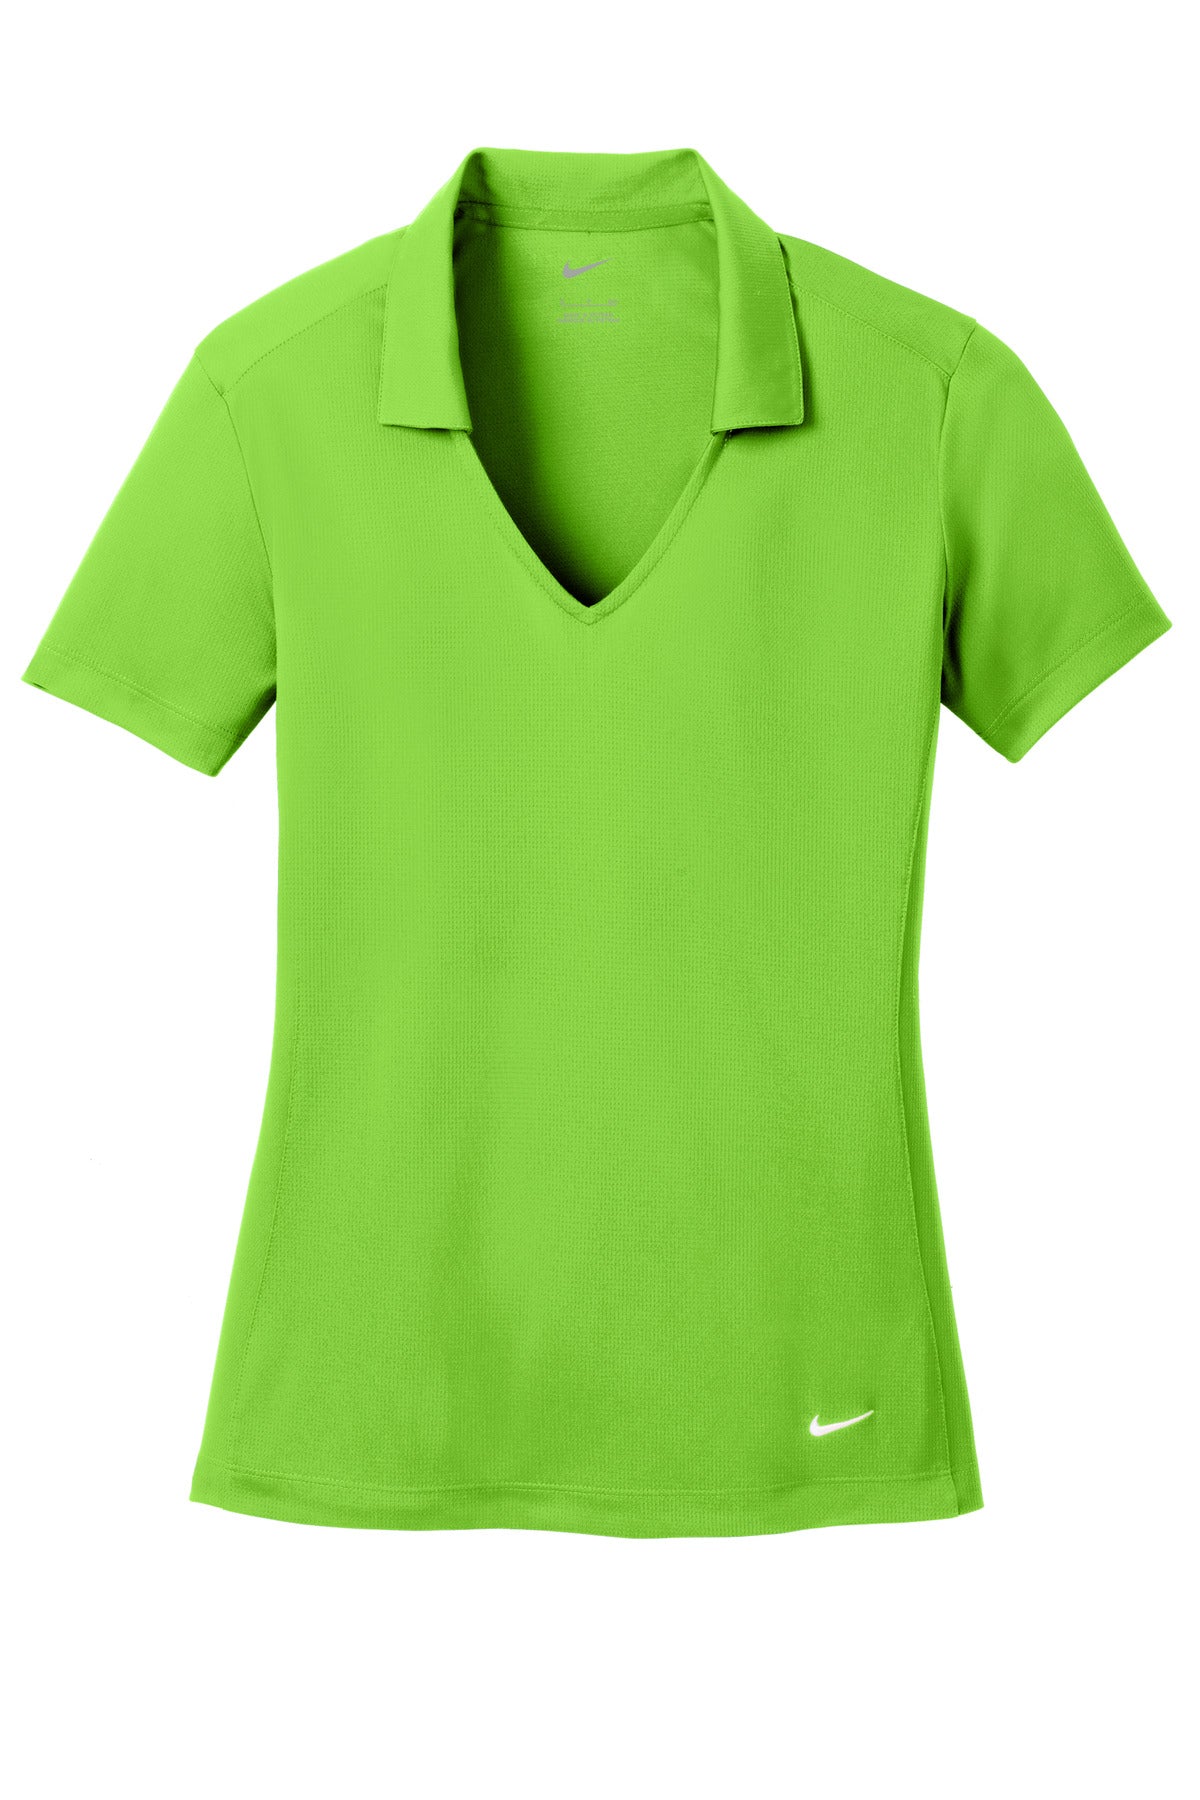 Nike Ladies Dri-FIT Vertical Mesh Polo. 637165